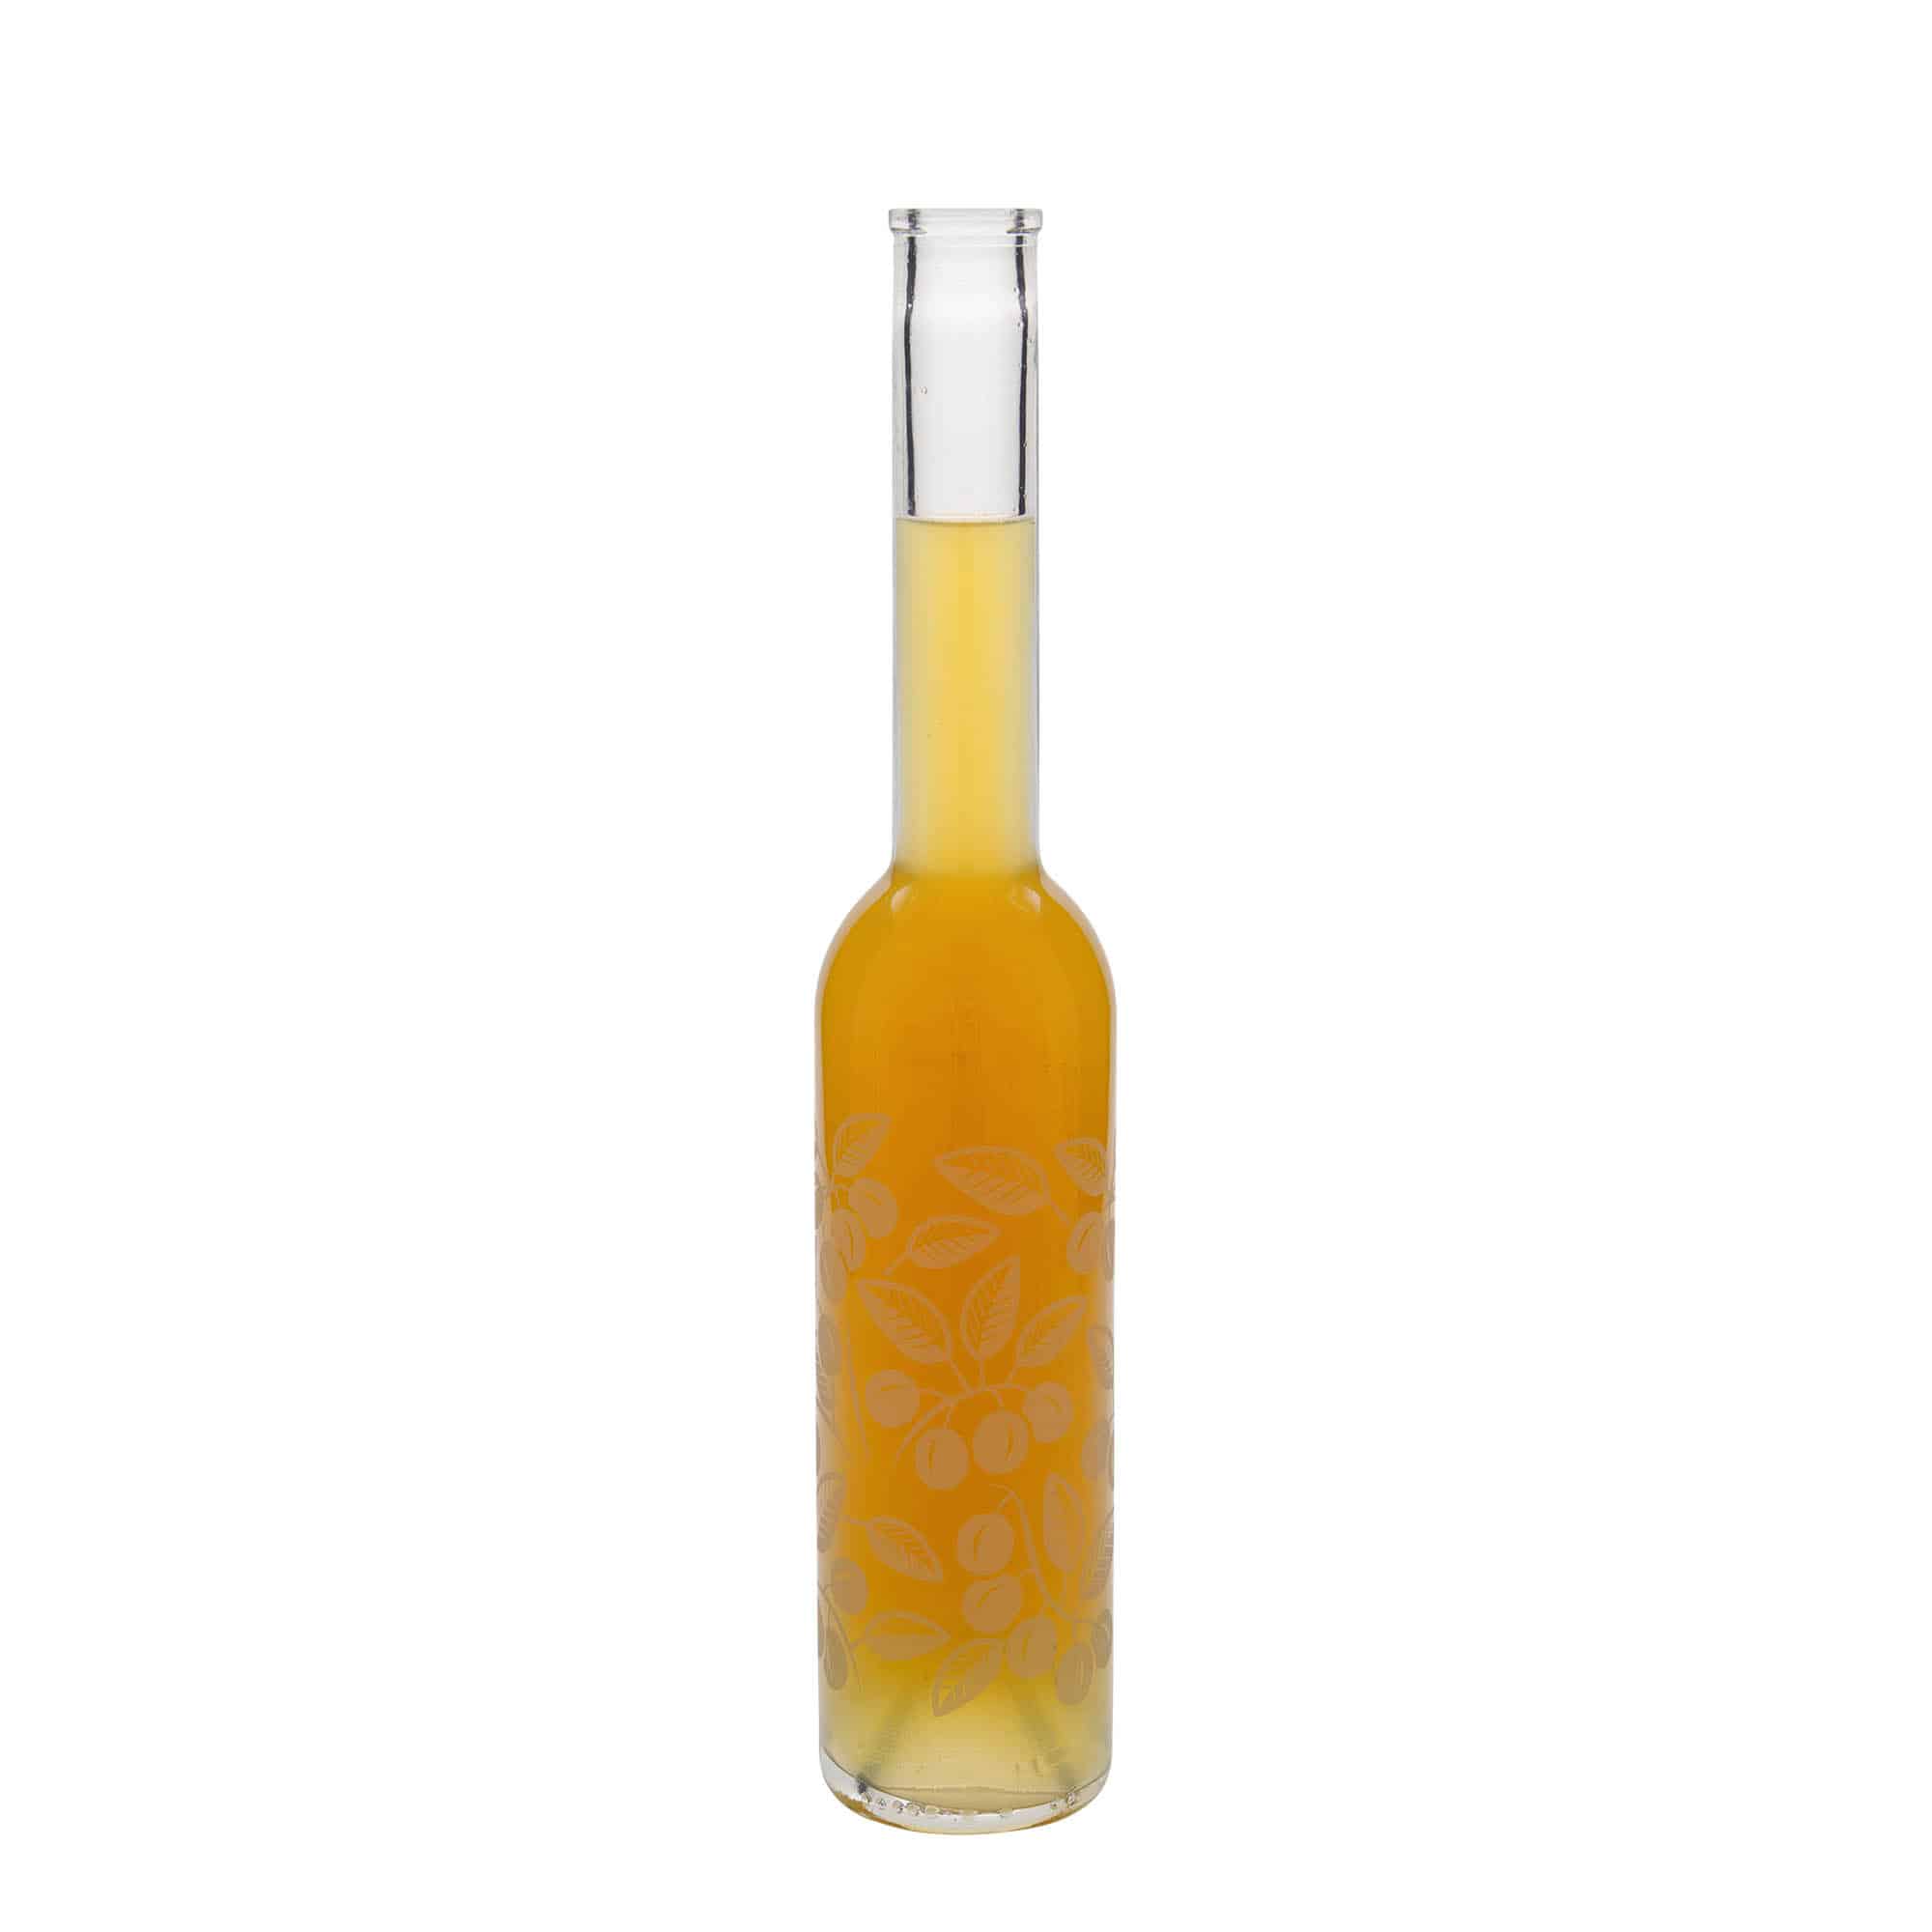 350 ml glass bottle 'Opera', print: mirabelles, closure: cork